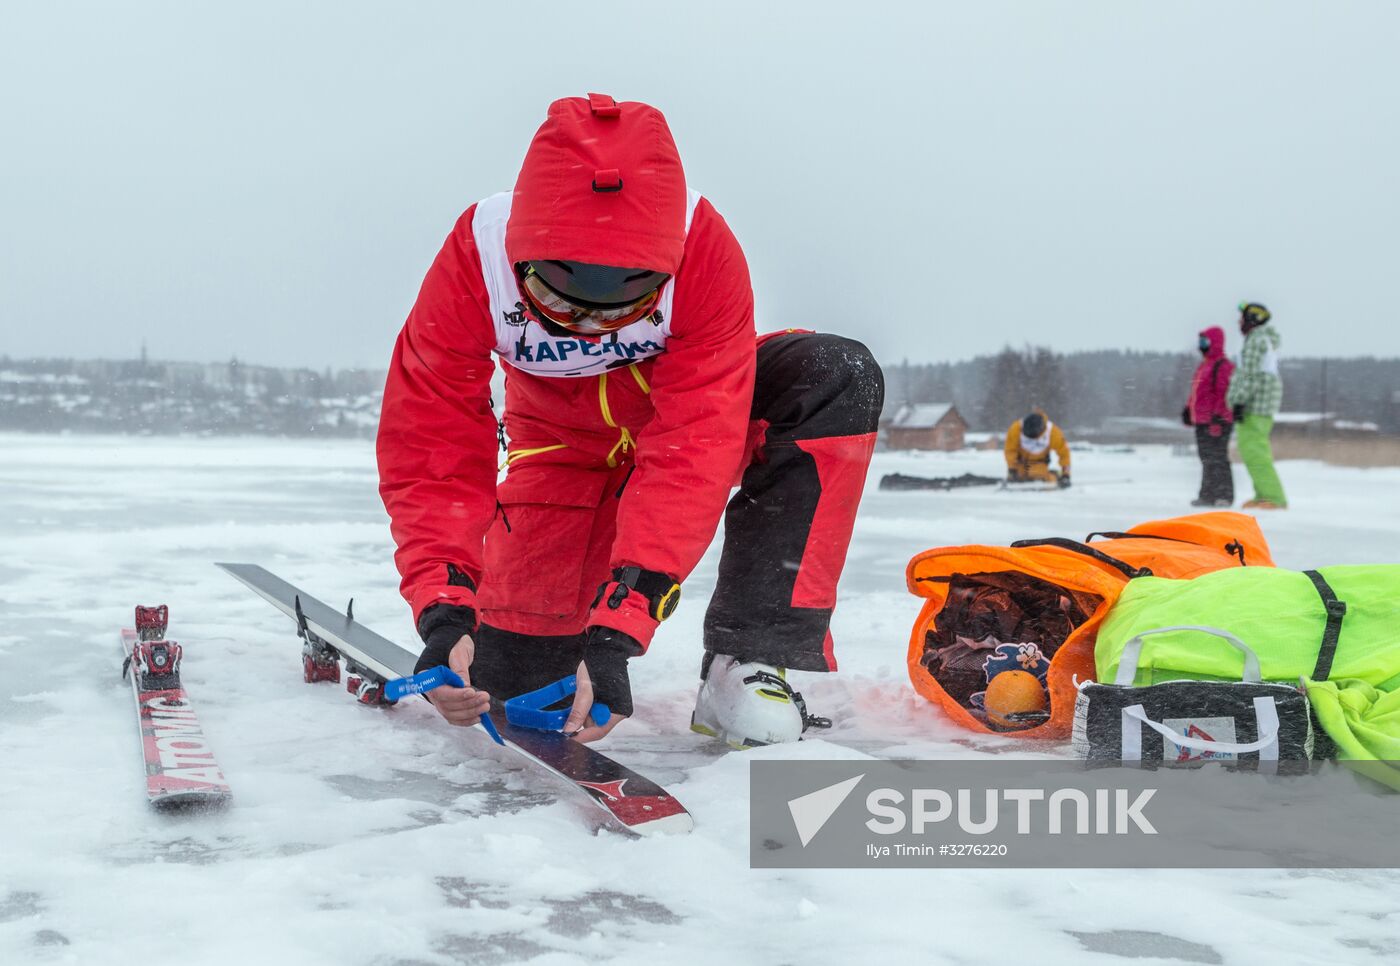 Snowkiting event 'Onezhsky veter' in Karelia